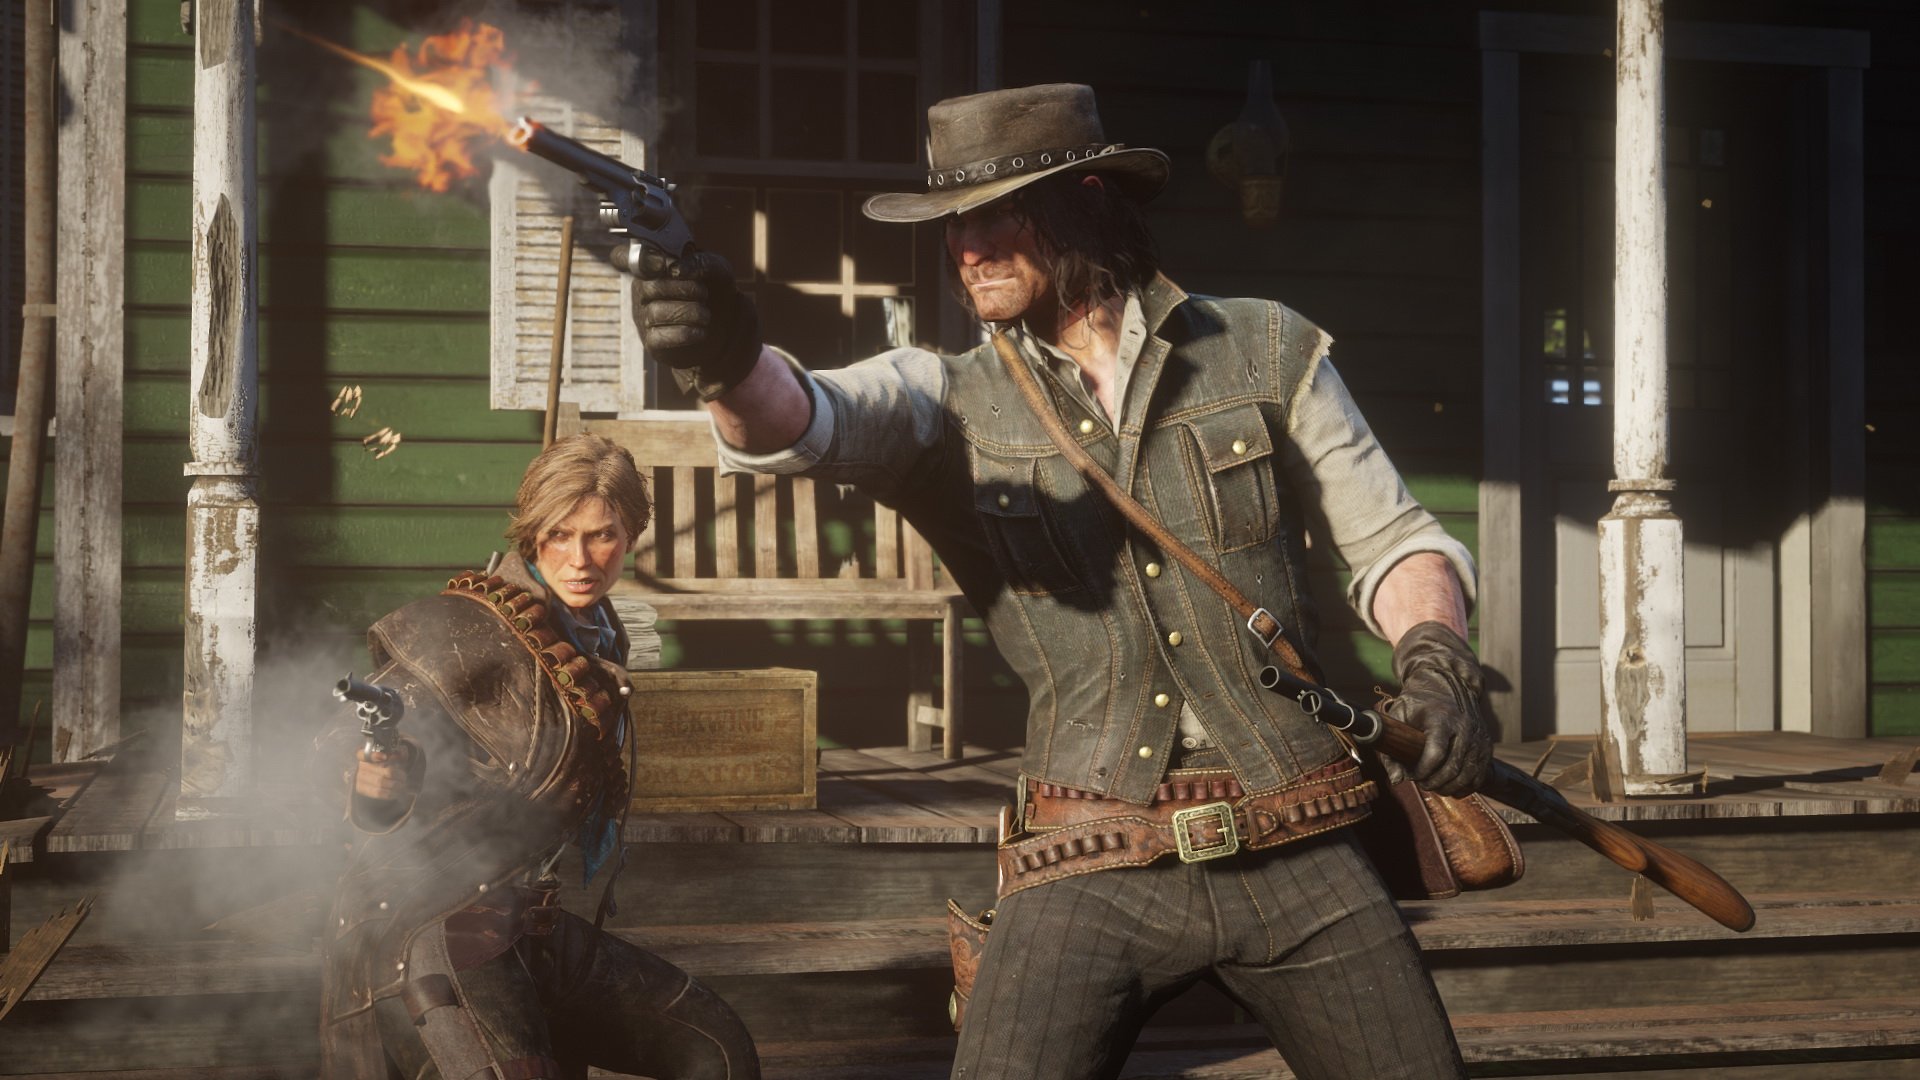 Rockstar Halts Red Dead Online Support to Focus on GTA - KeenGamer